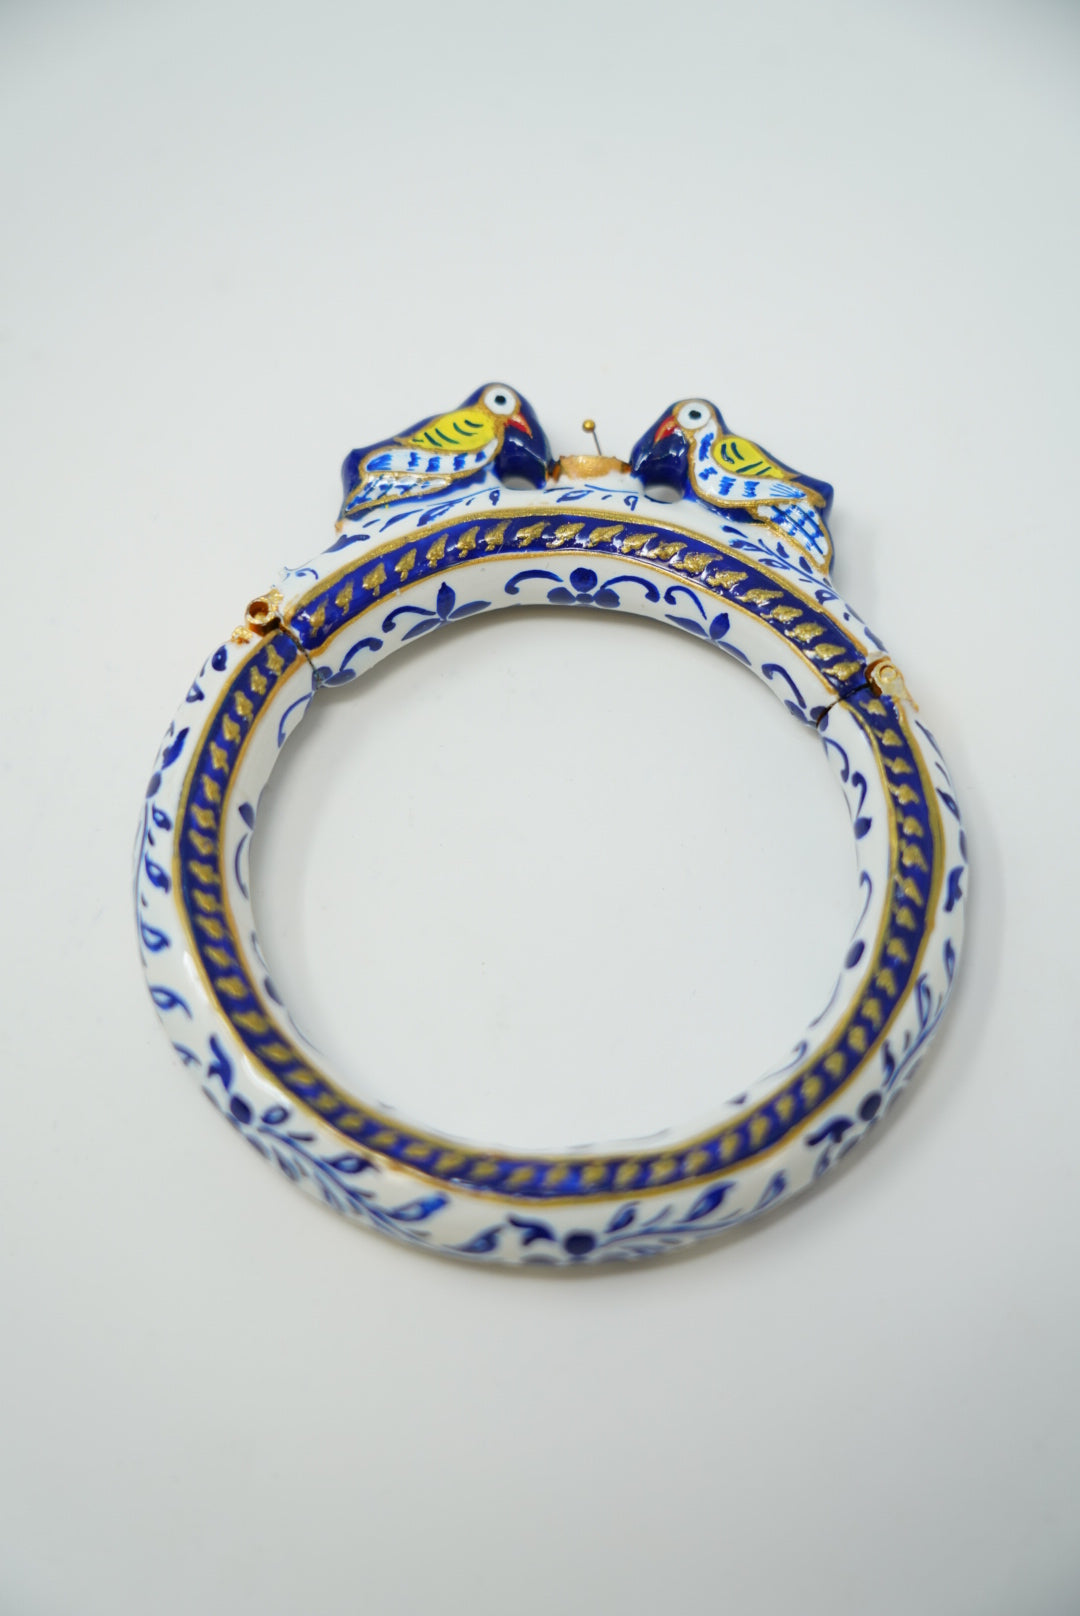 Meenakari Bird Bracelet with White and Blue Colour